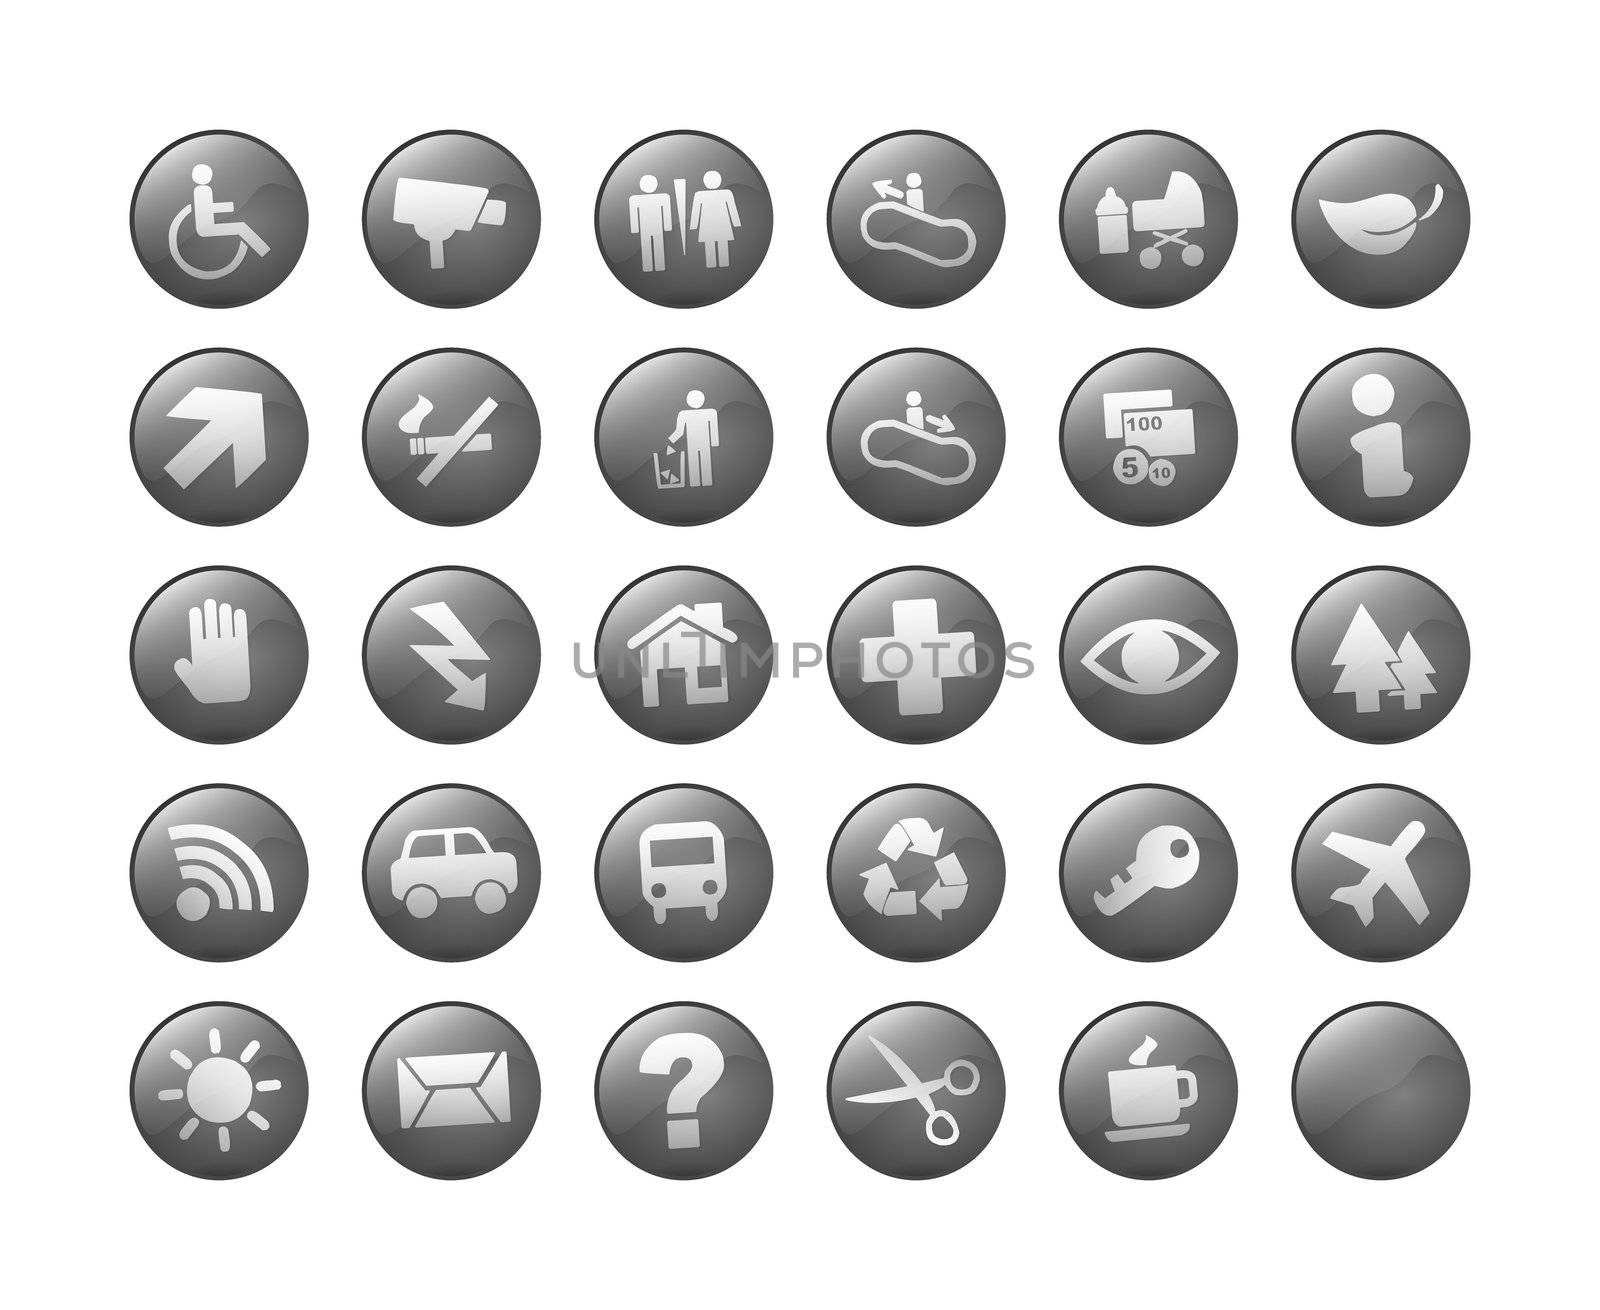 symbols icons web by magann